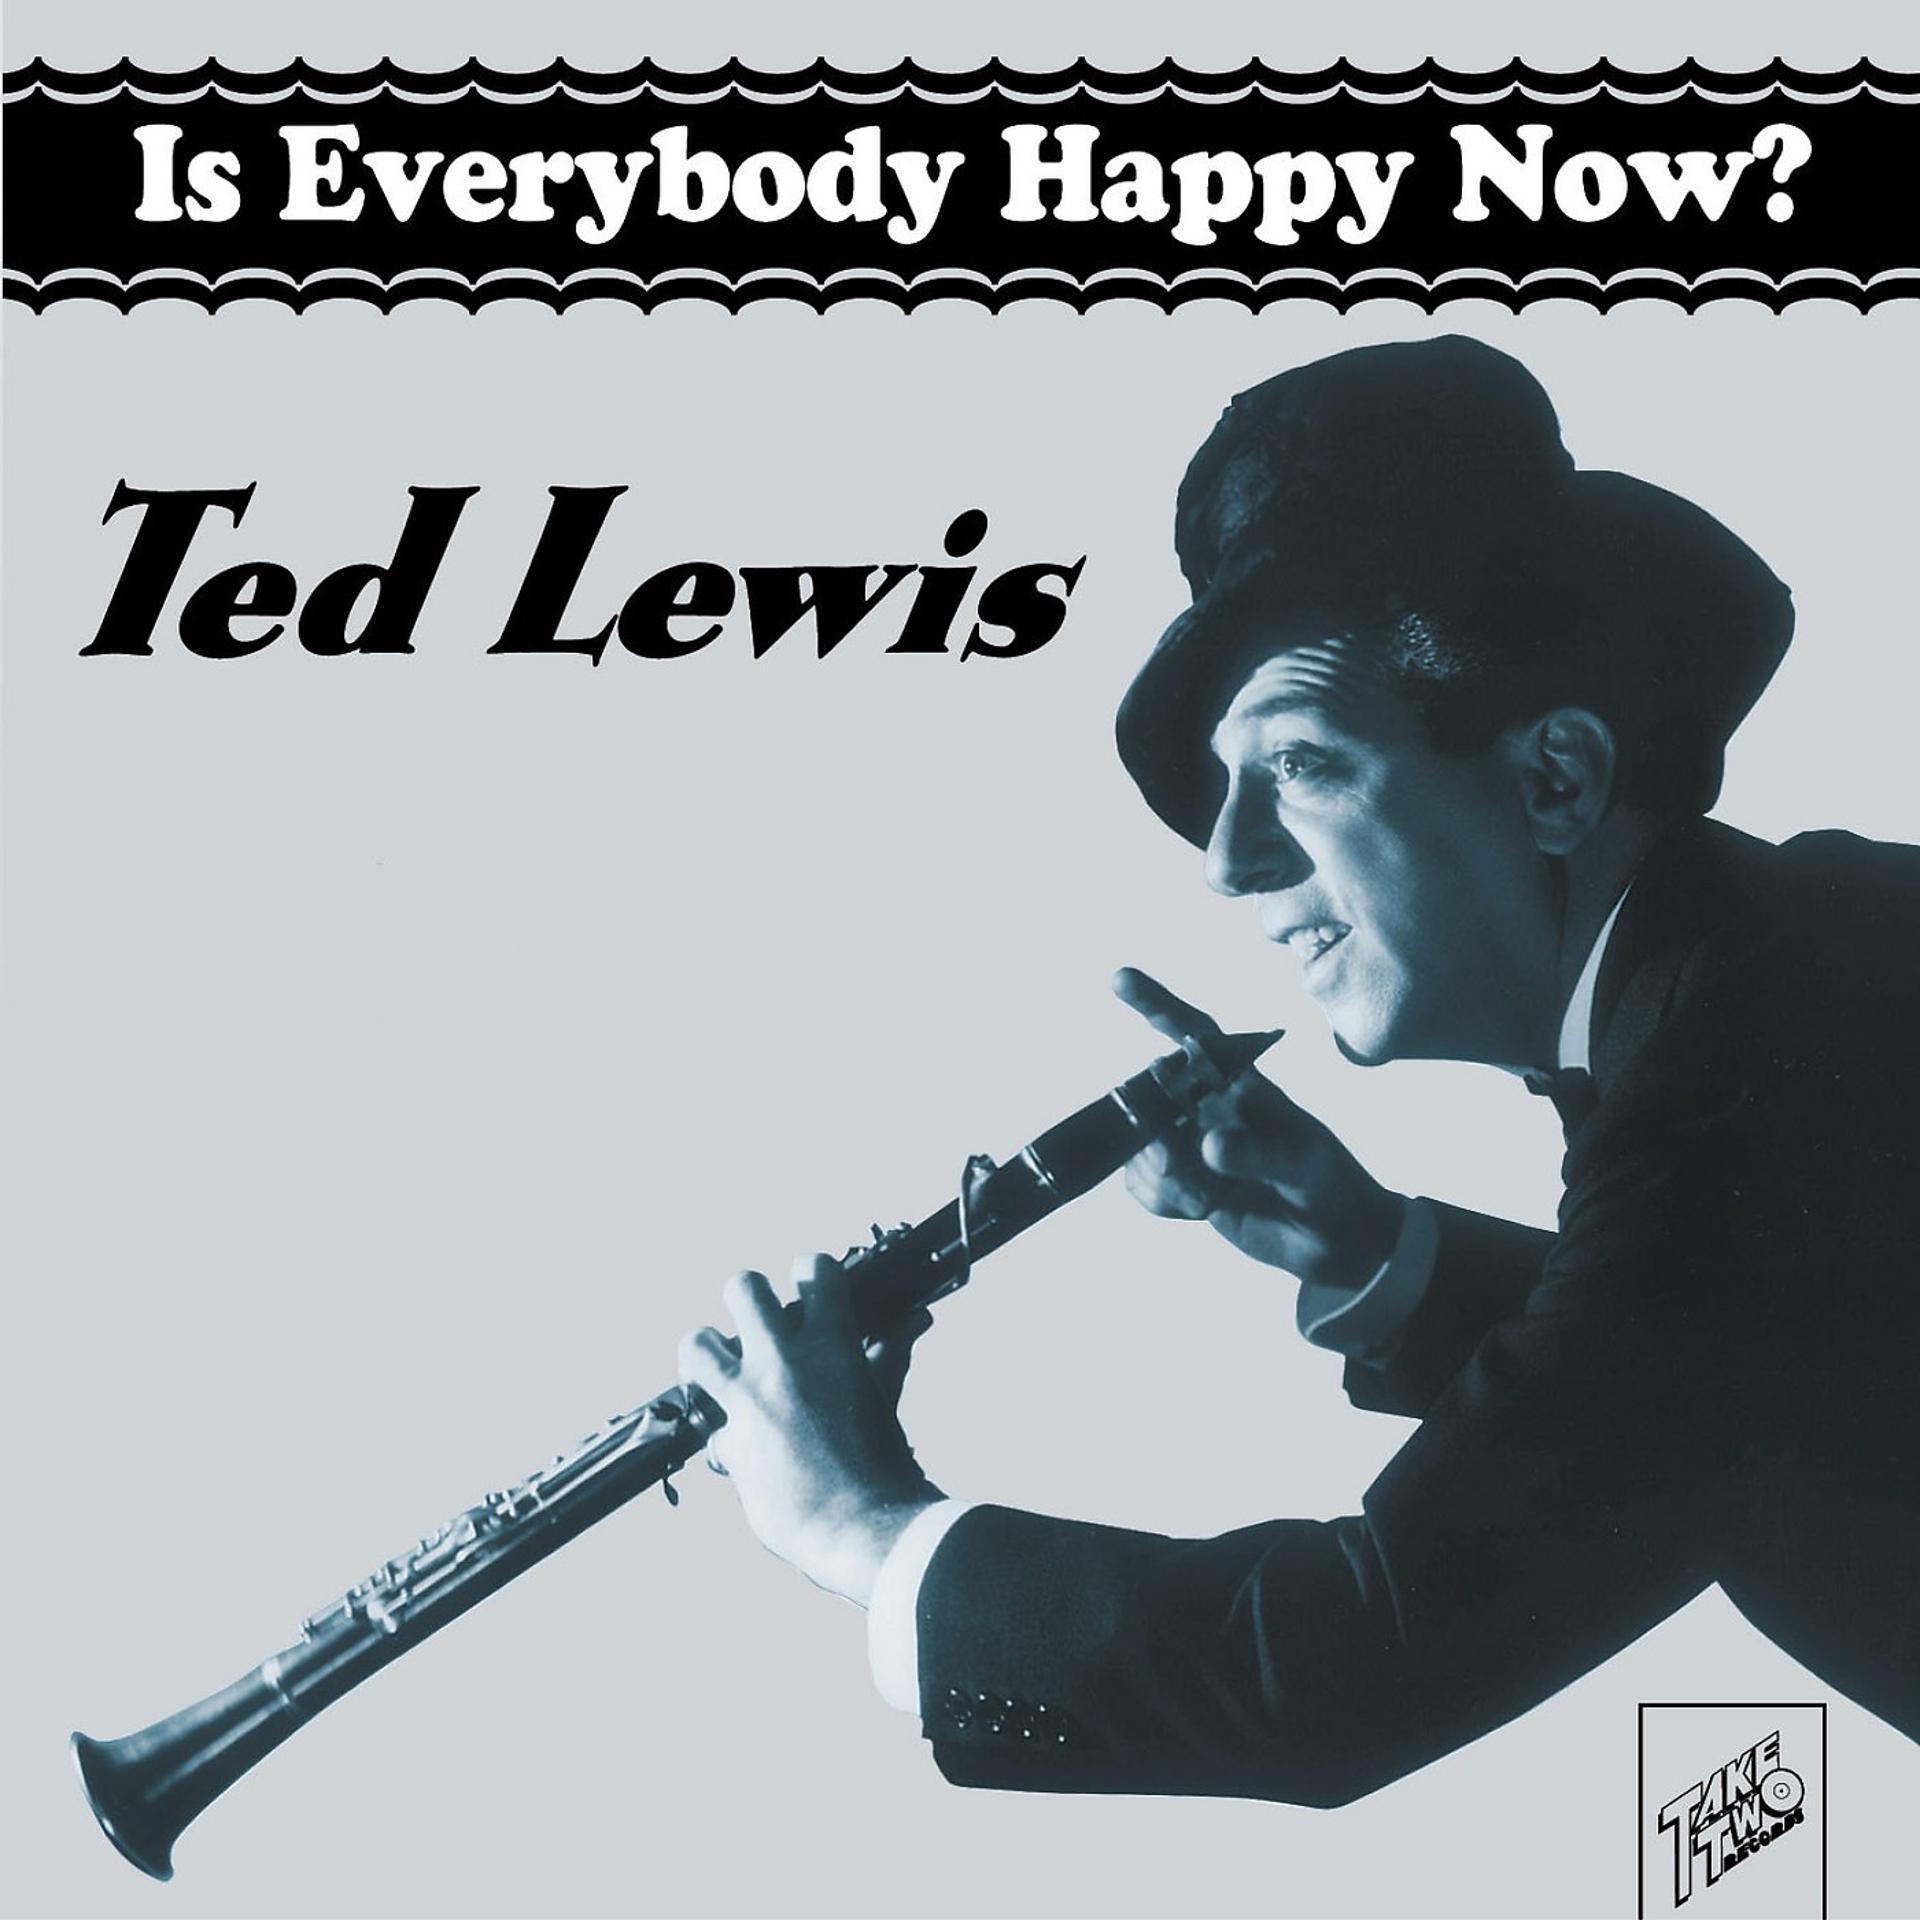 Everybody be happy. Тед Льюис. Тэд Льюис музыкант. Джонни Тед. Ted Lewis Jack Carter and the Law.